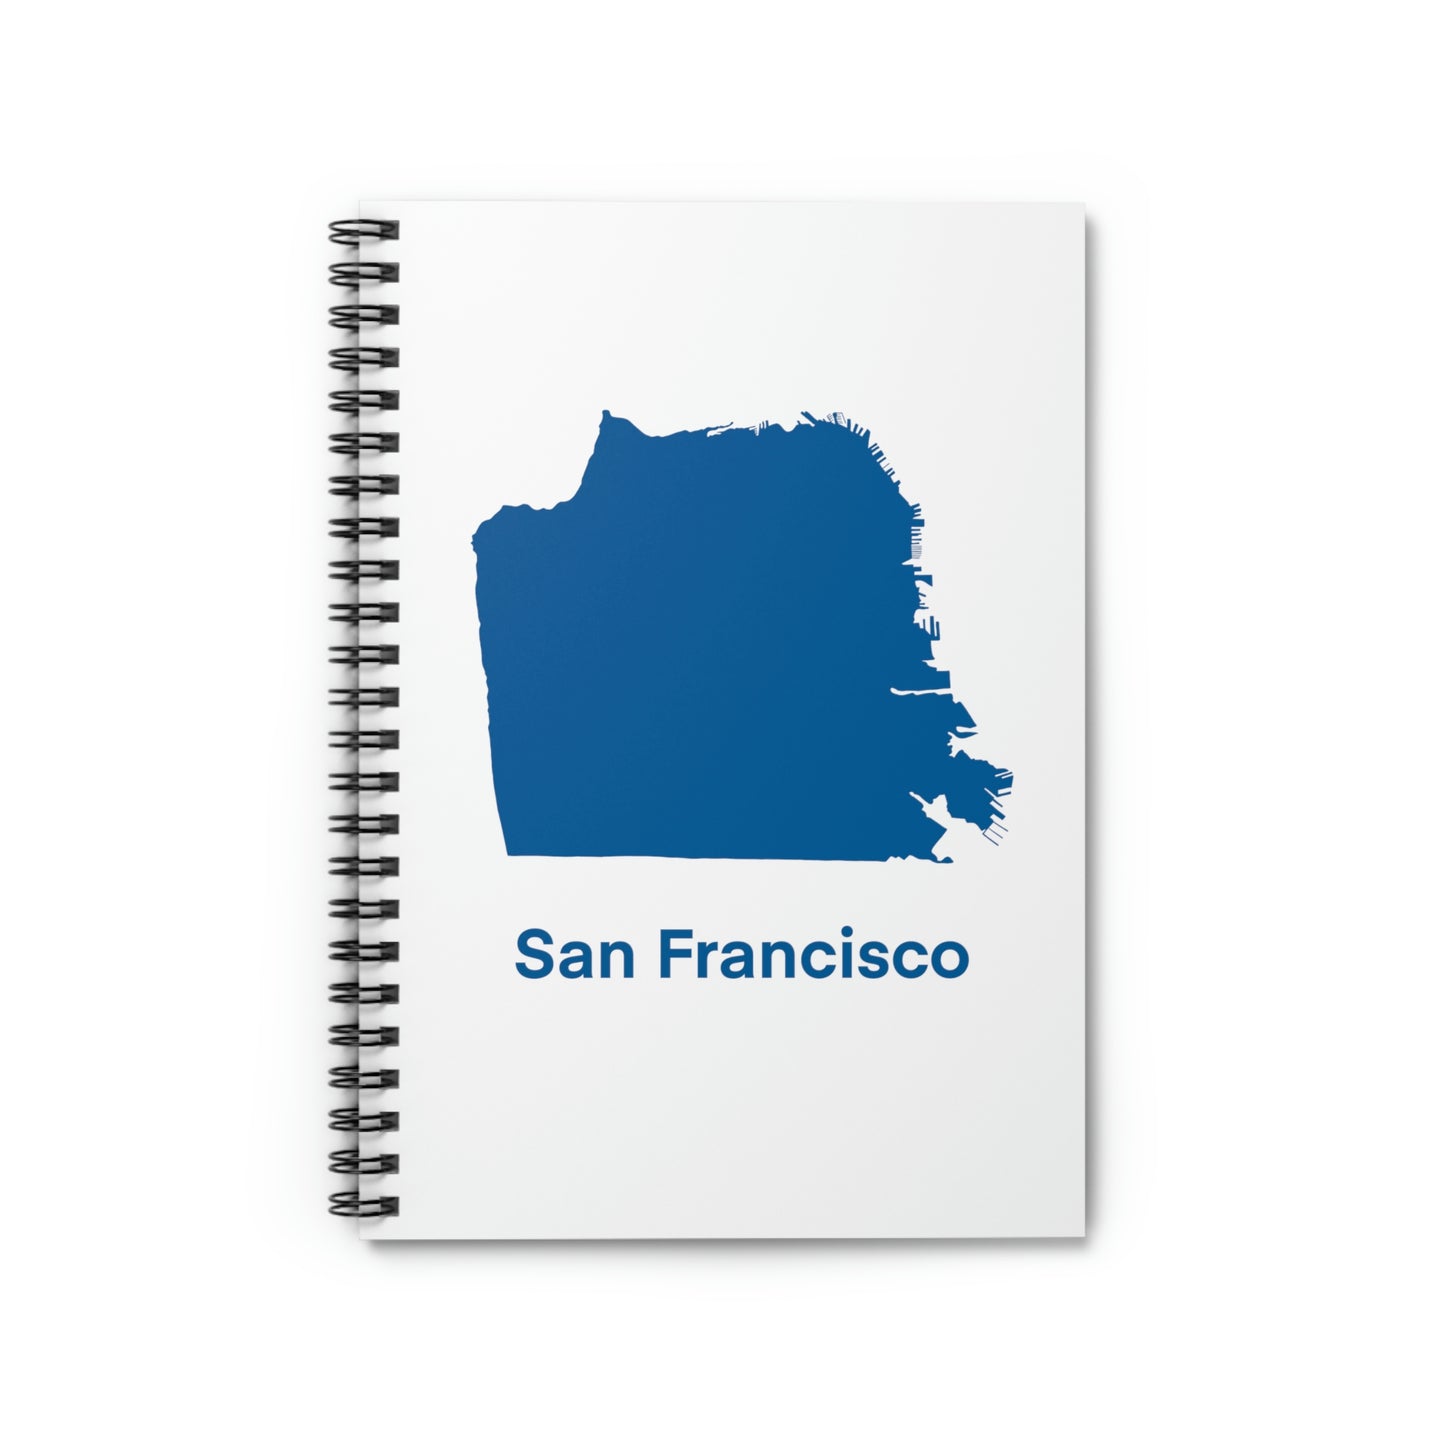 San Francisco Blue Spiral Notebook - Ruled Line